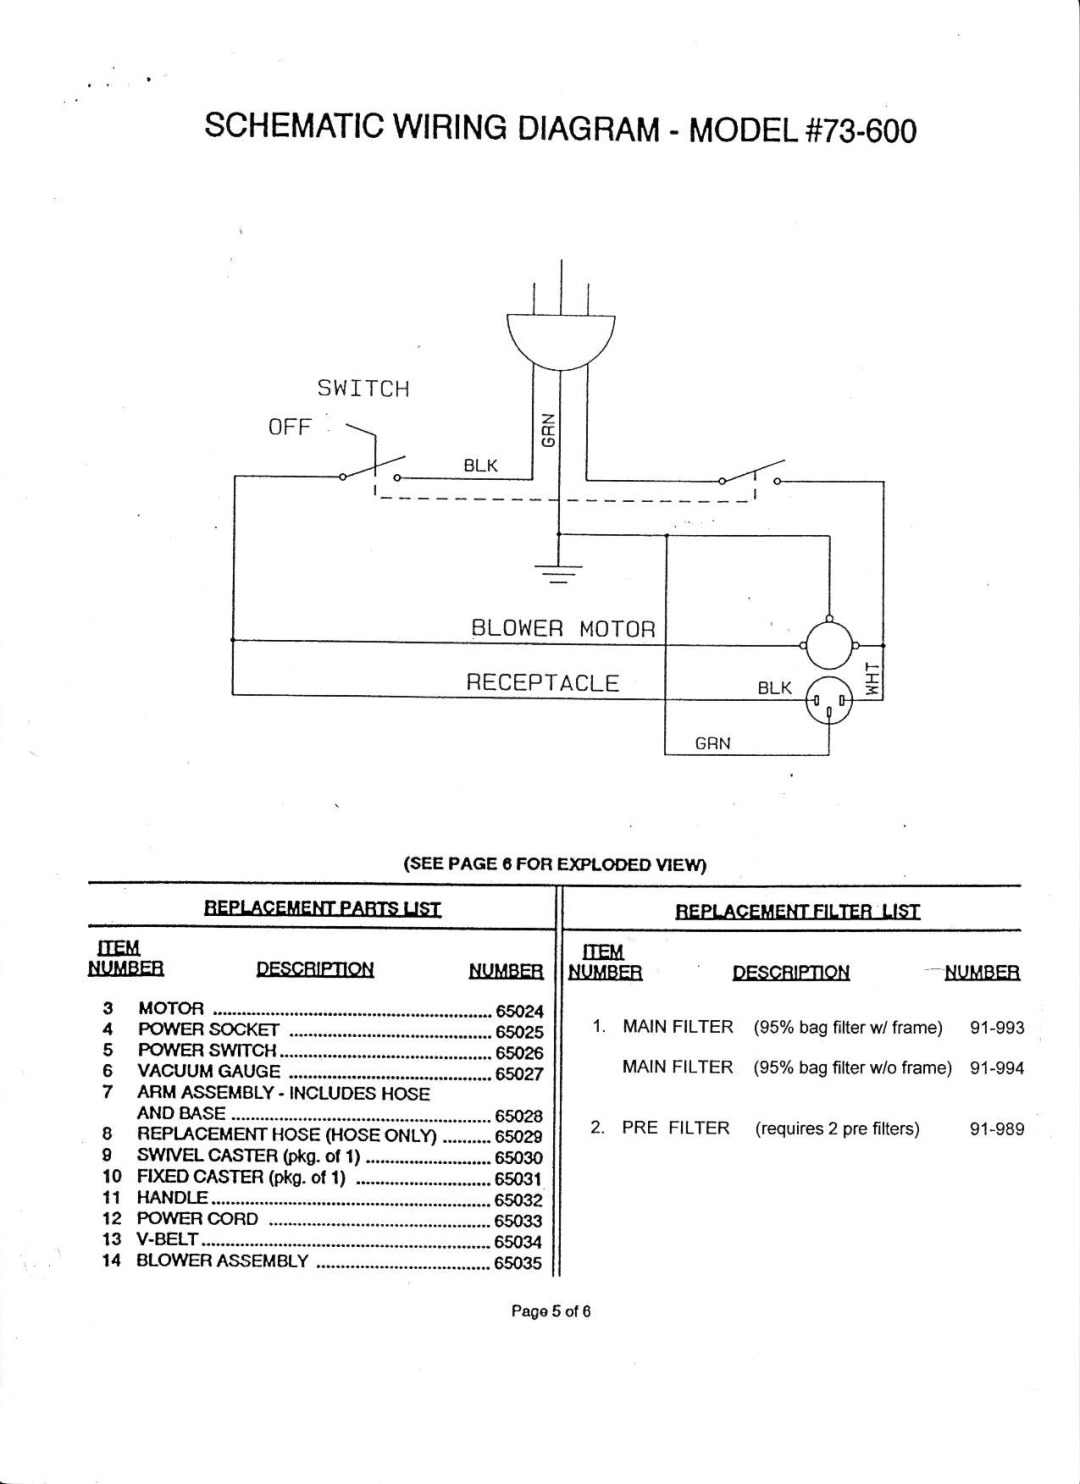 Associated Equipment manual Switch Off Blowebmotob Receptacle, Iieii, SCHEMATICWIRINGDIAGRAM- MODEL#73-600 